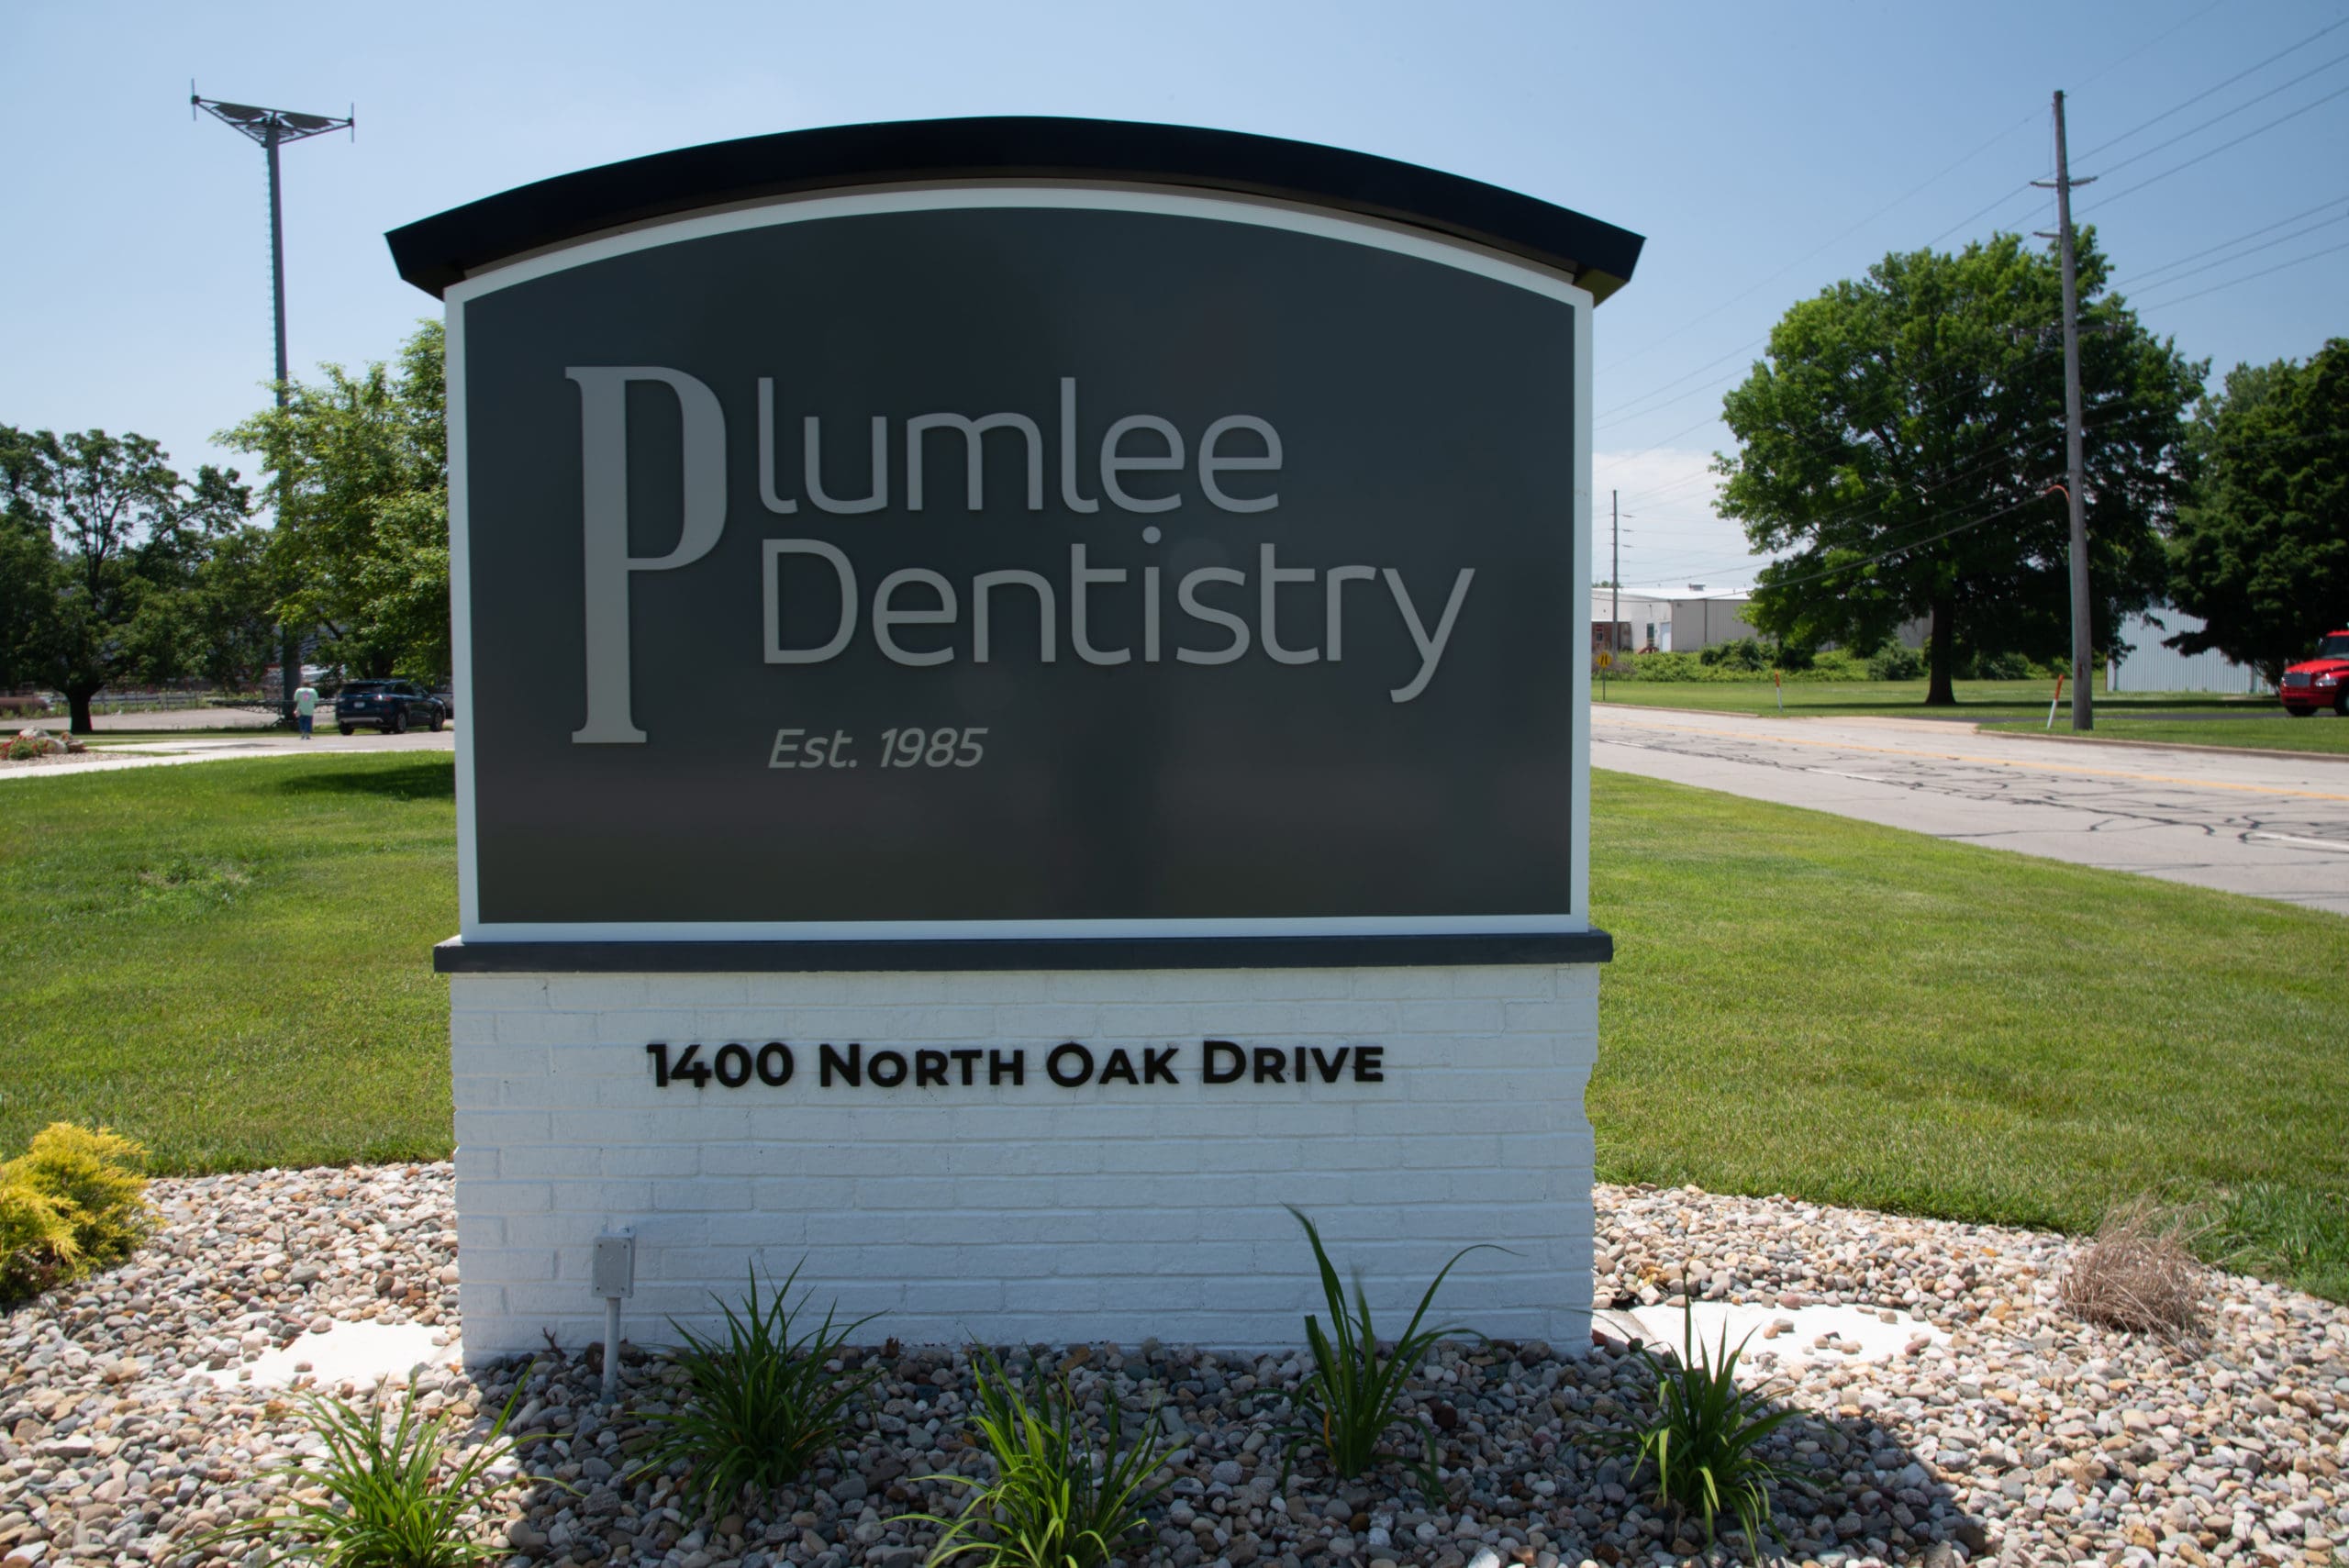 Plumlee Dentistry signage